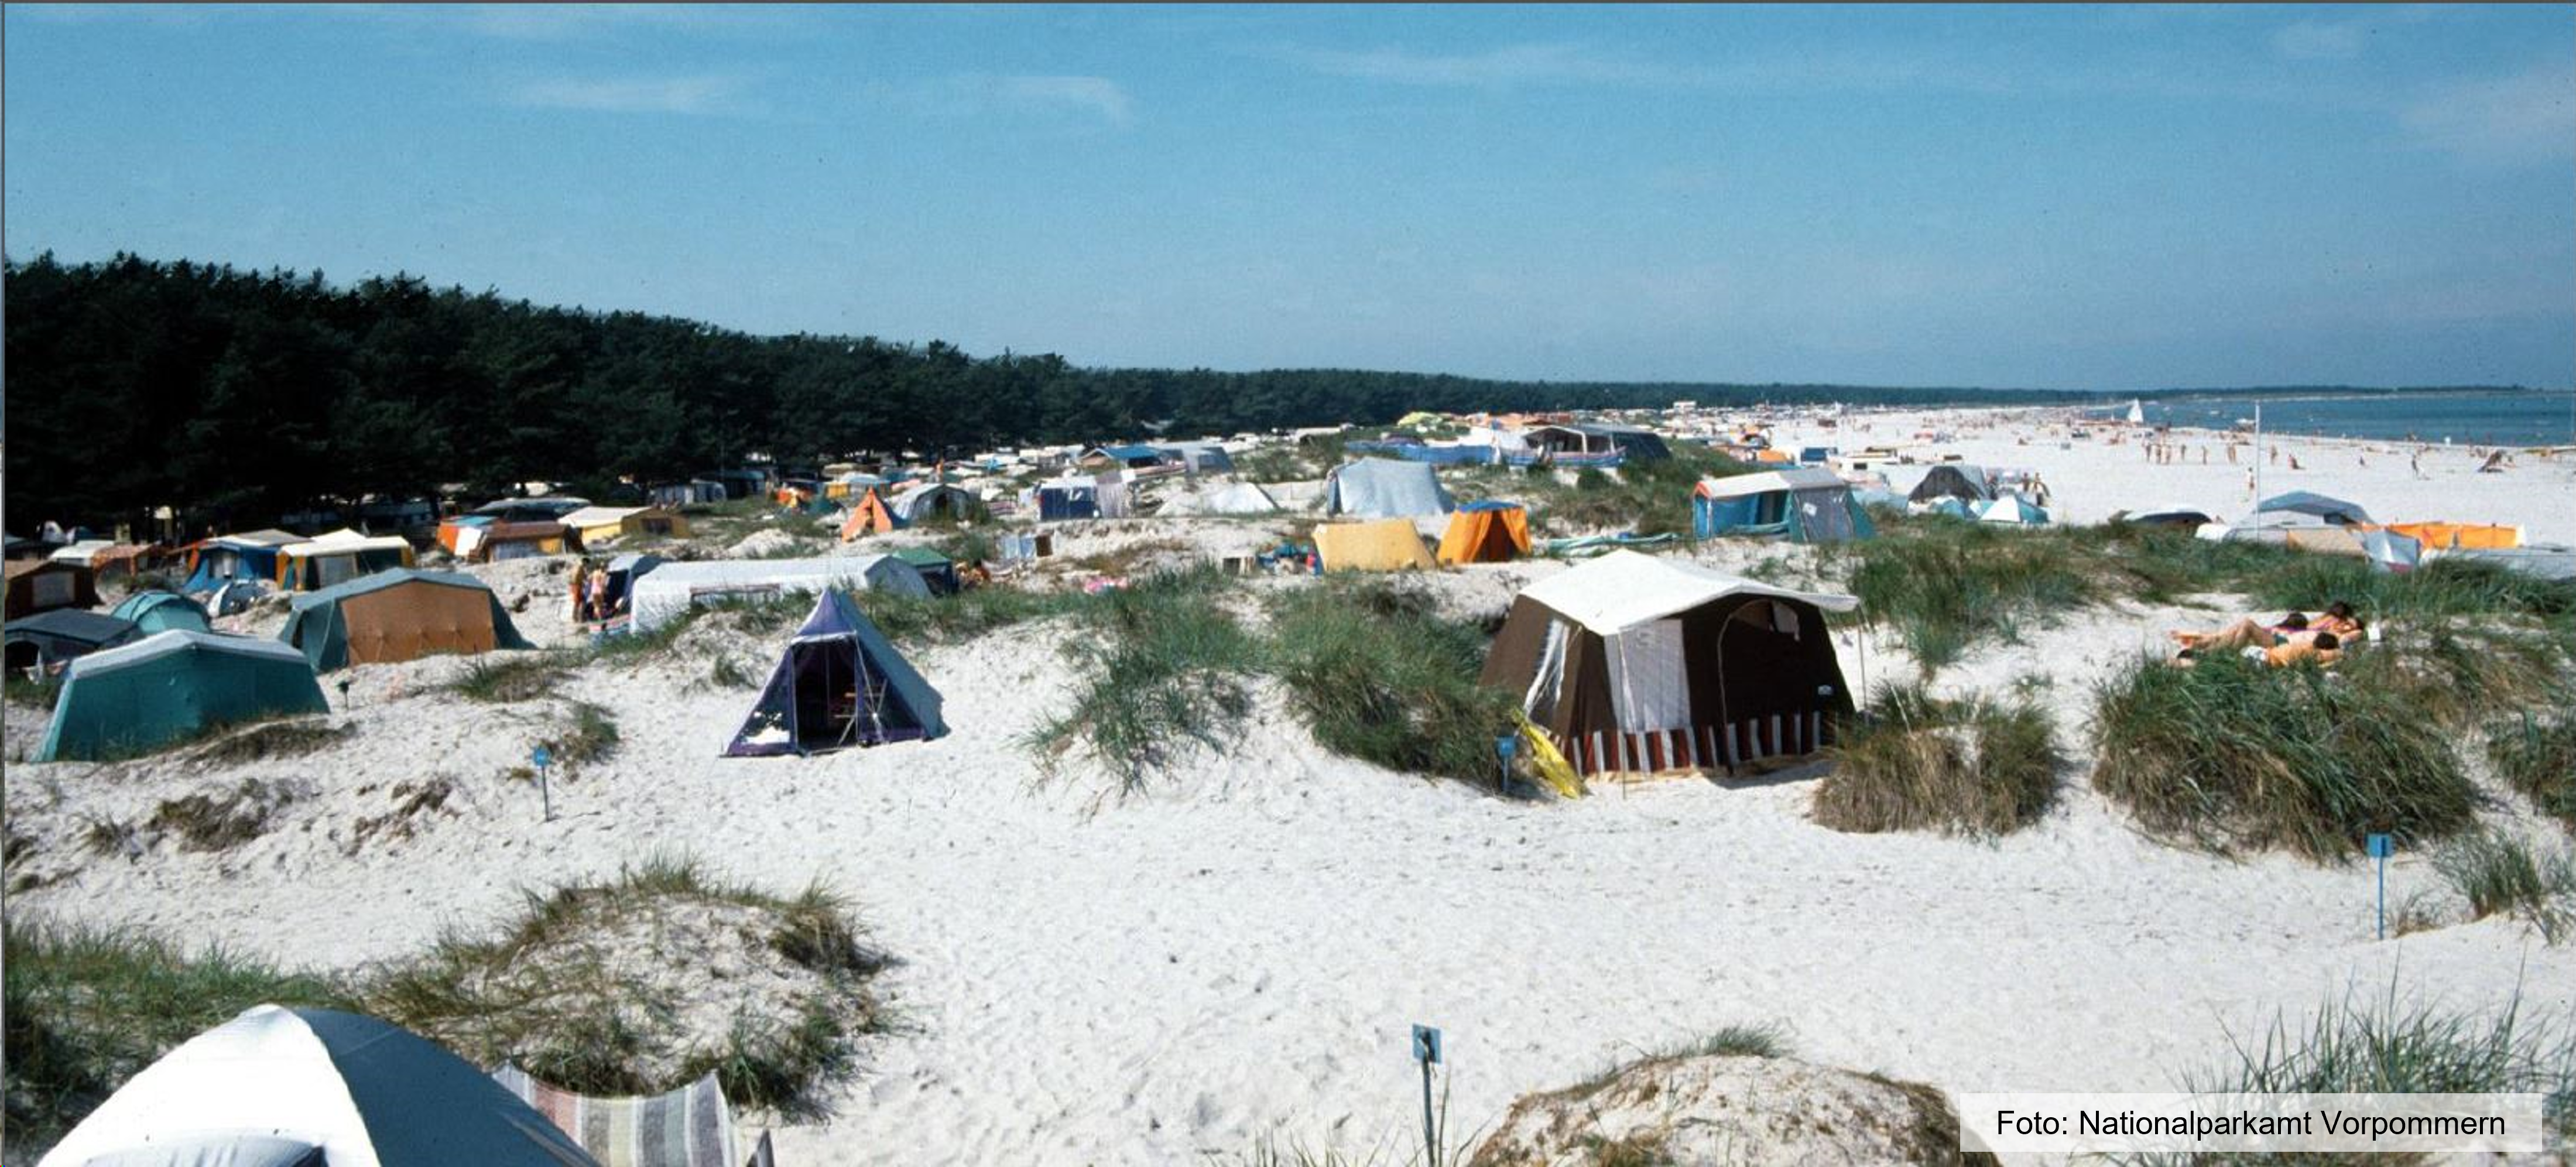 Campingplatz Prerow: Auswahlverfahren erfolgreich abgeschlossen